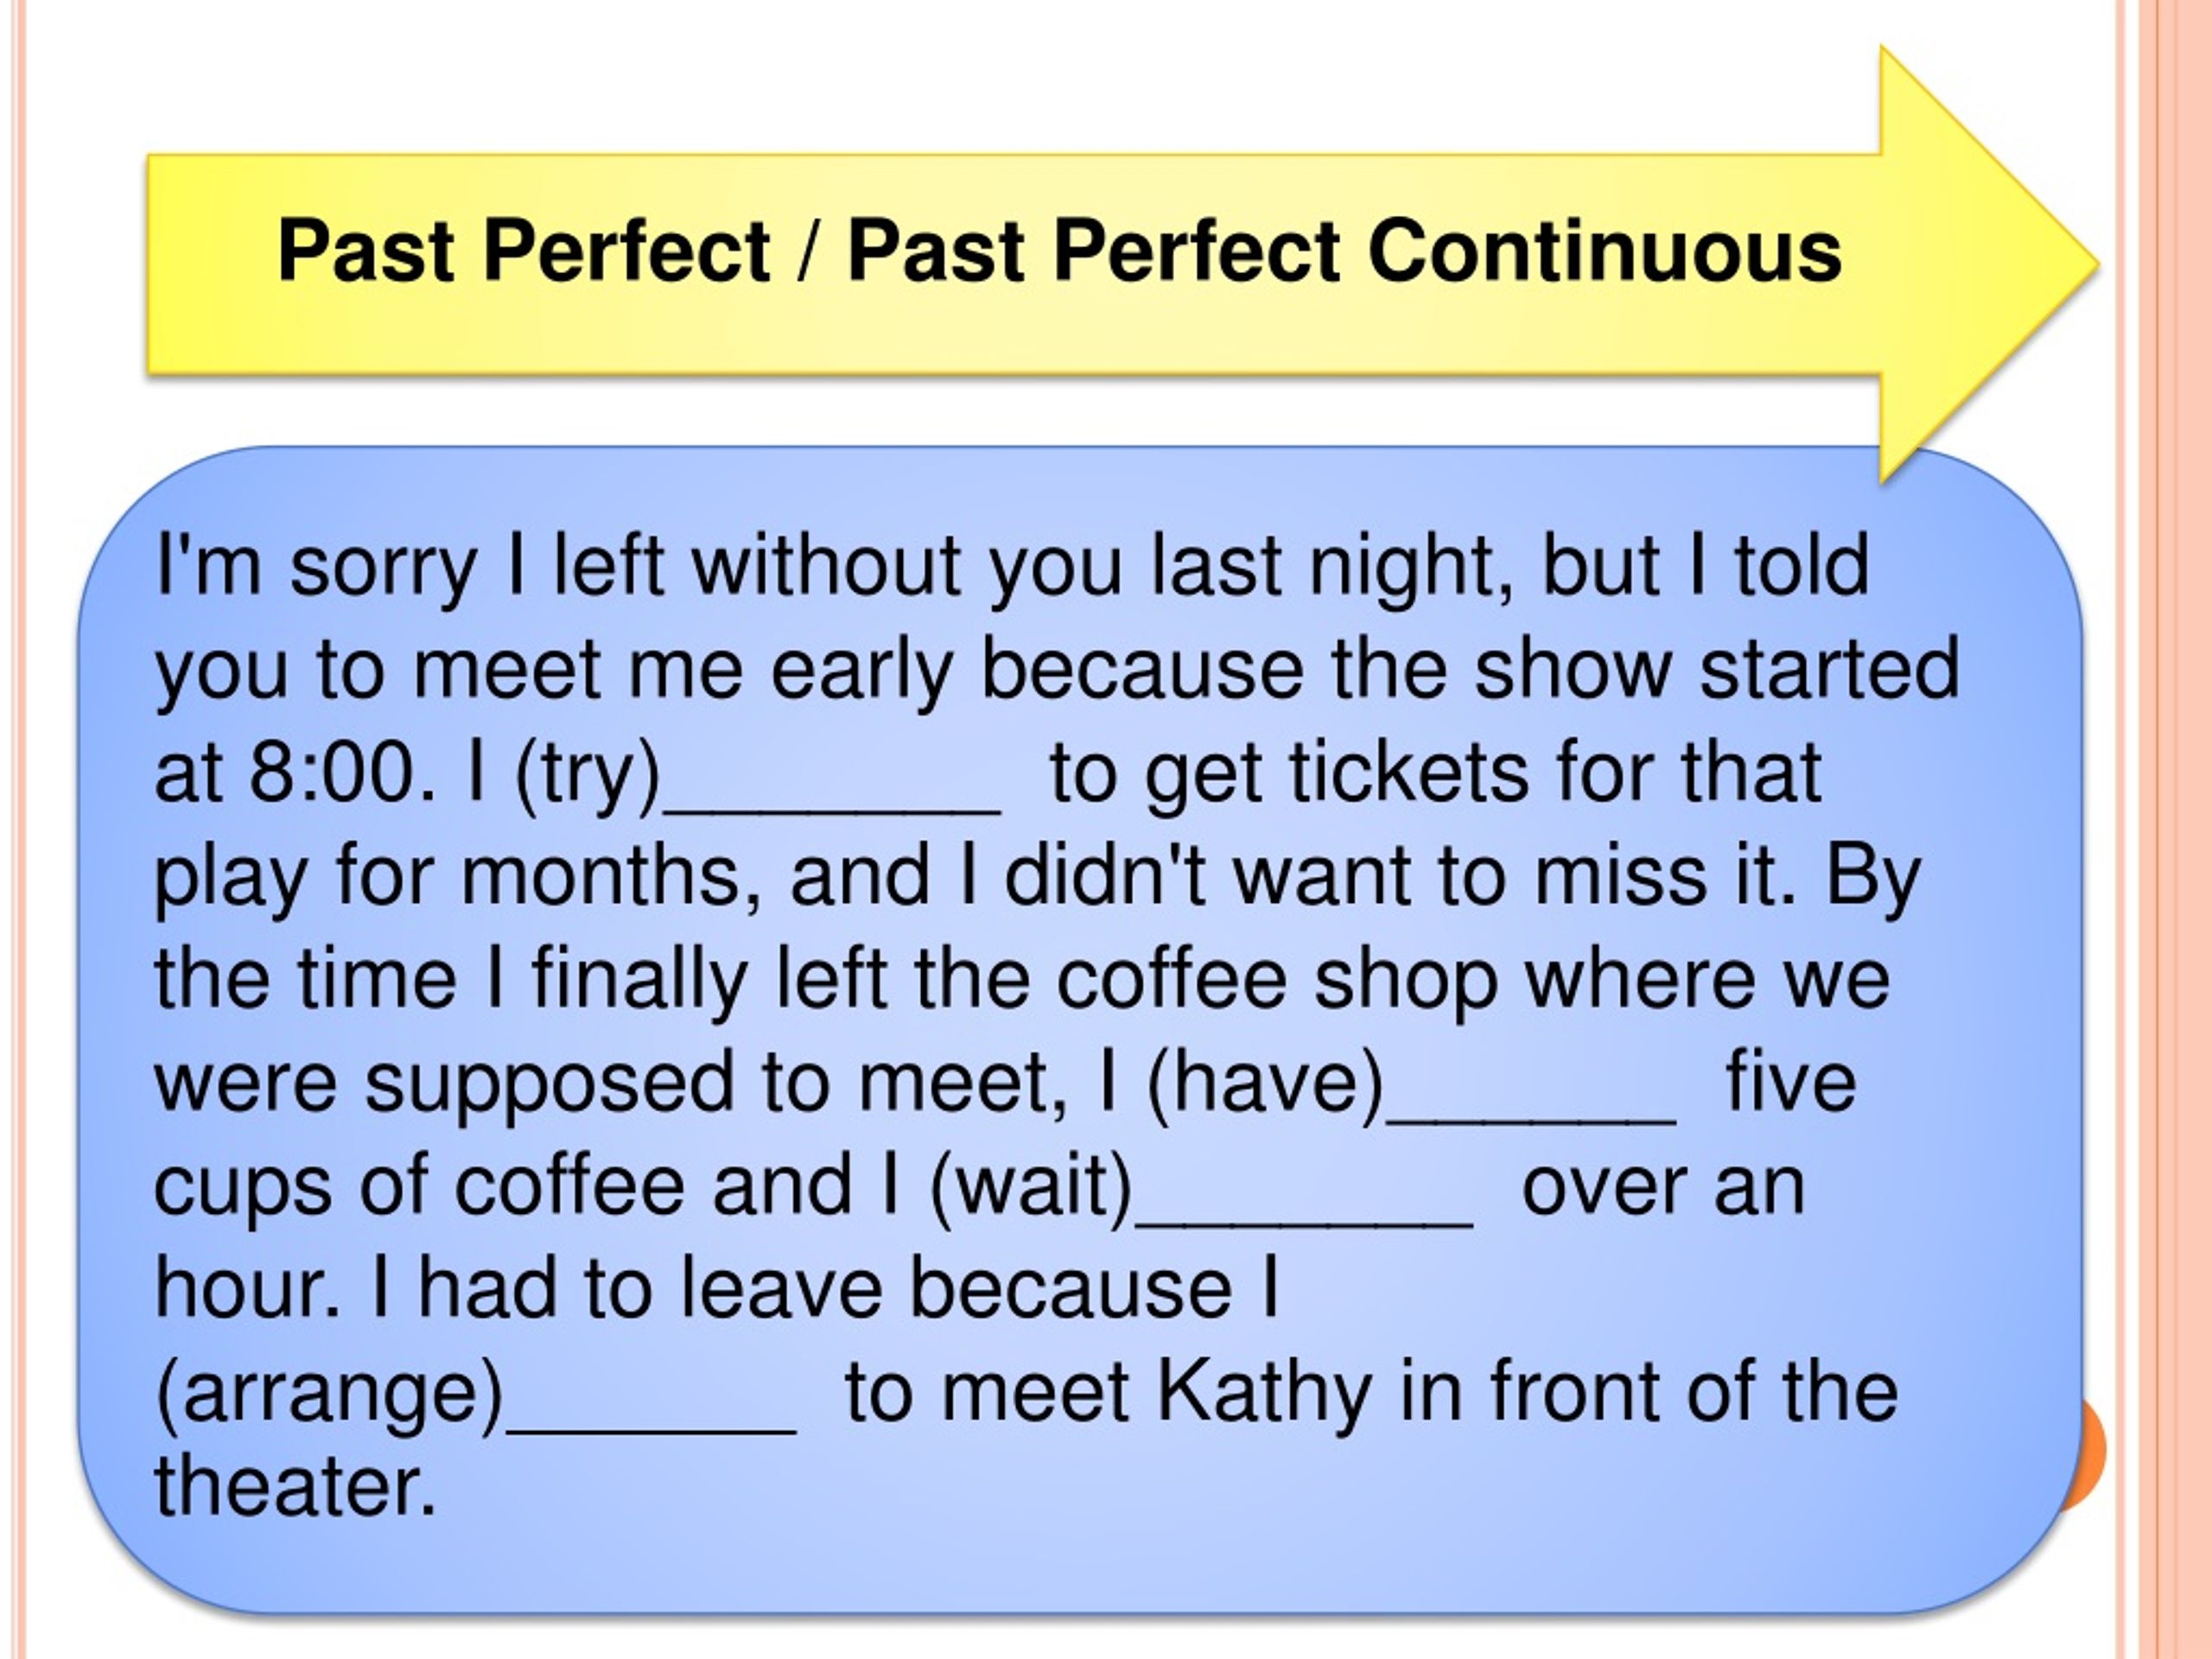 Exercise в прошедшем времени. Past perfect past perfect Continuous упражнения 8 класс. Past perfect past perfect Continuous упражнения. Past perfect Continuous упражнения. Past perfect упражнения.